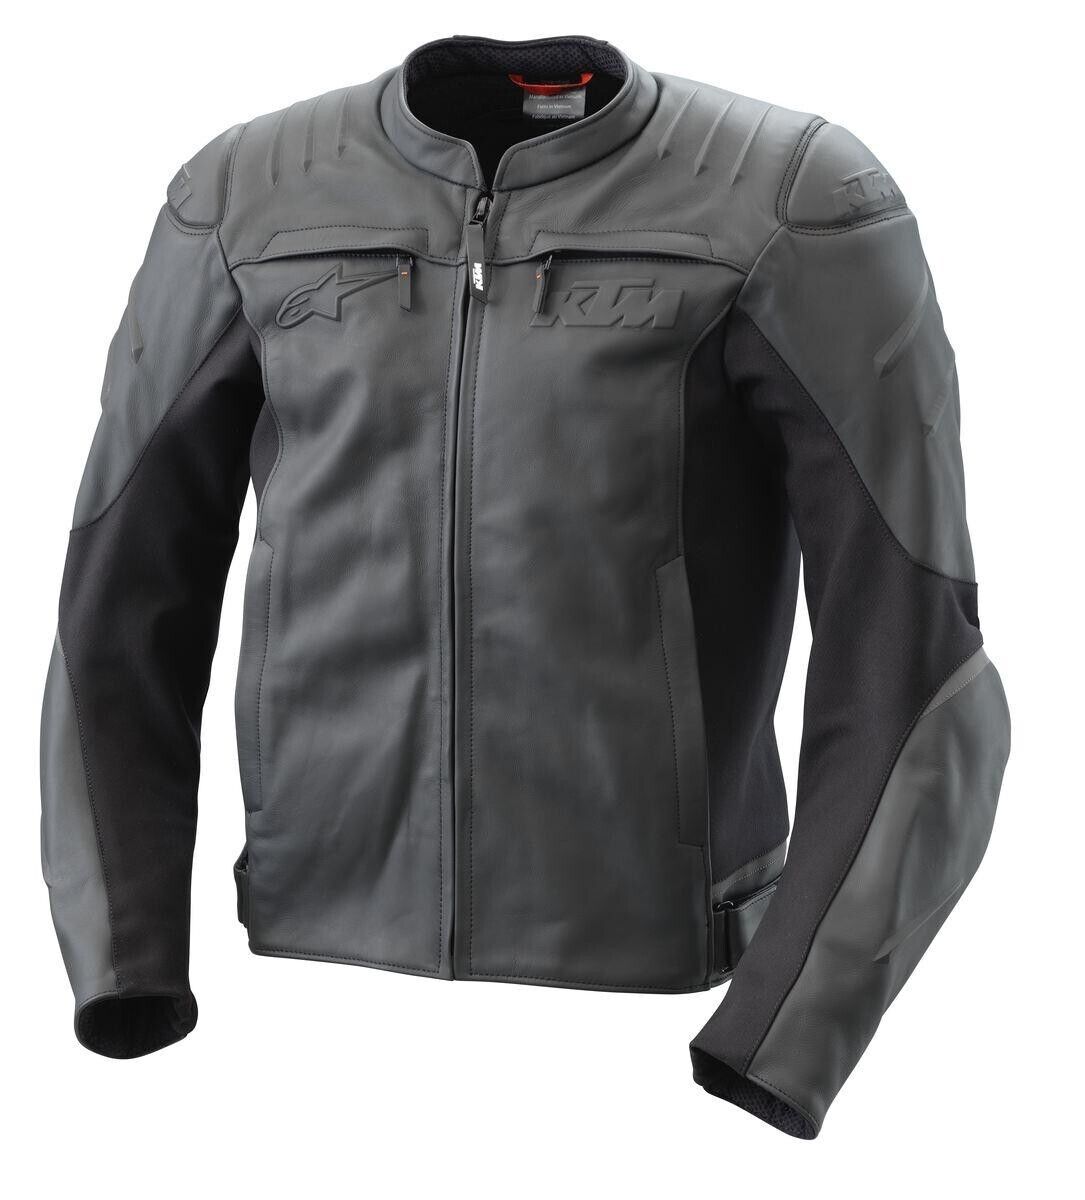 KTM Resonance Leather Jacket by Alpinestars (Large) - 3PW210006704